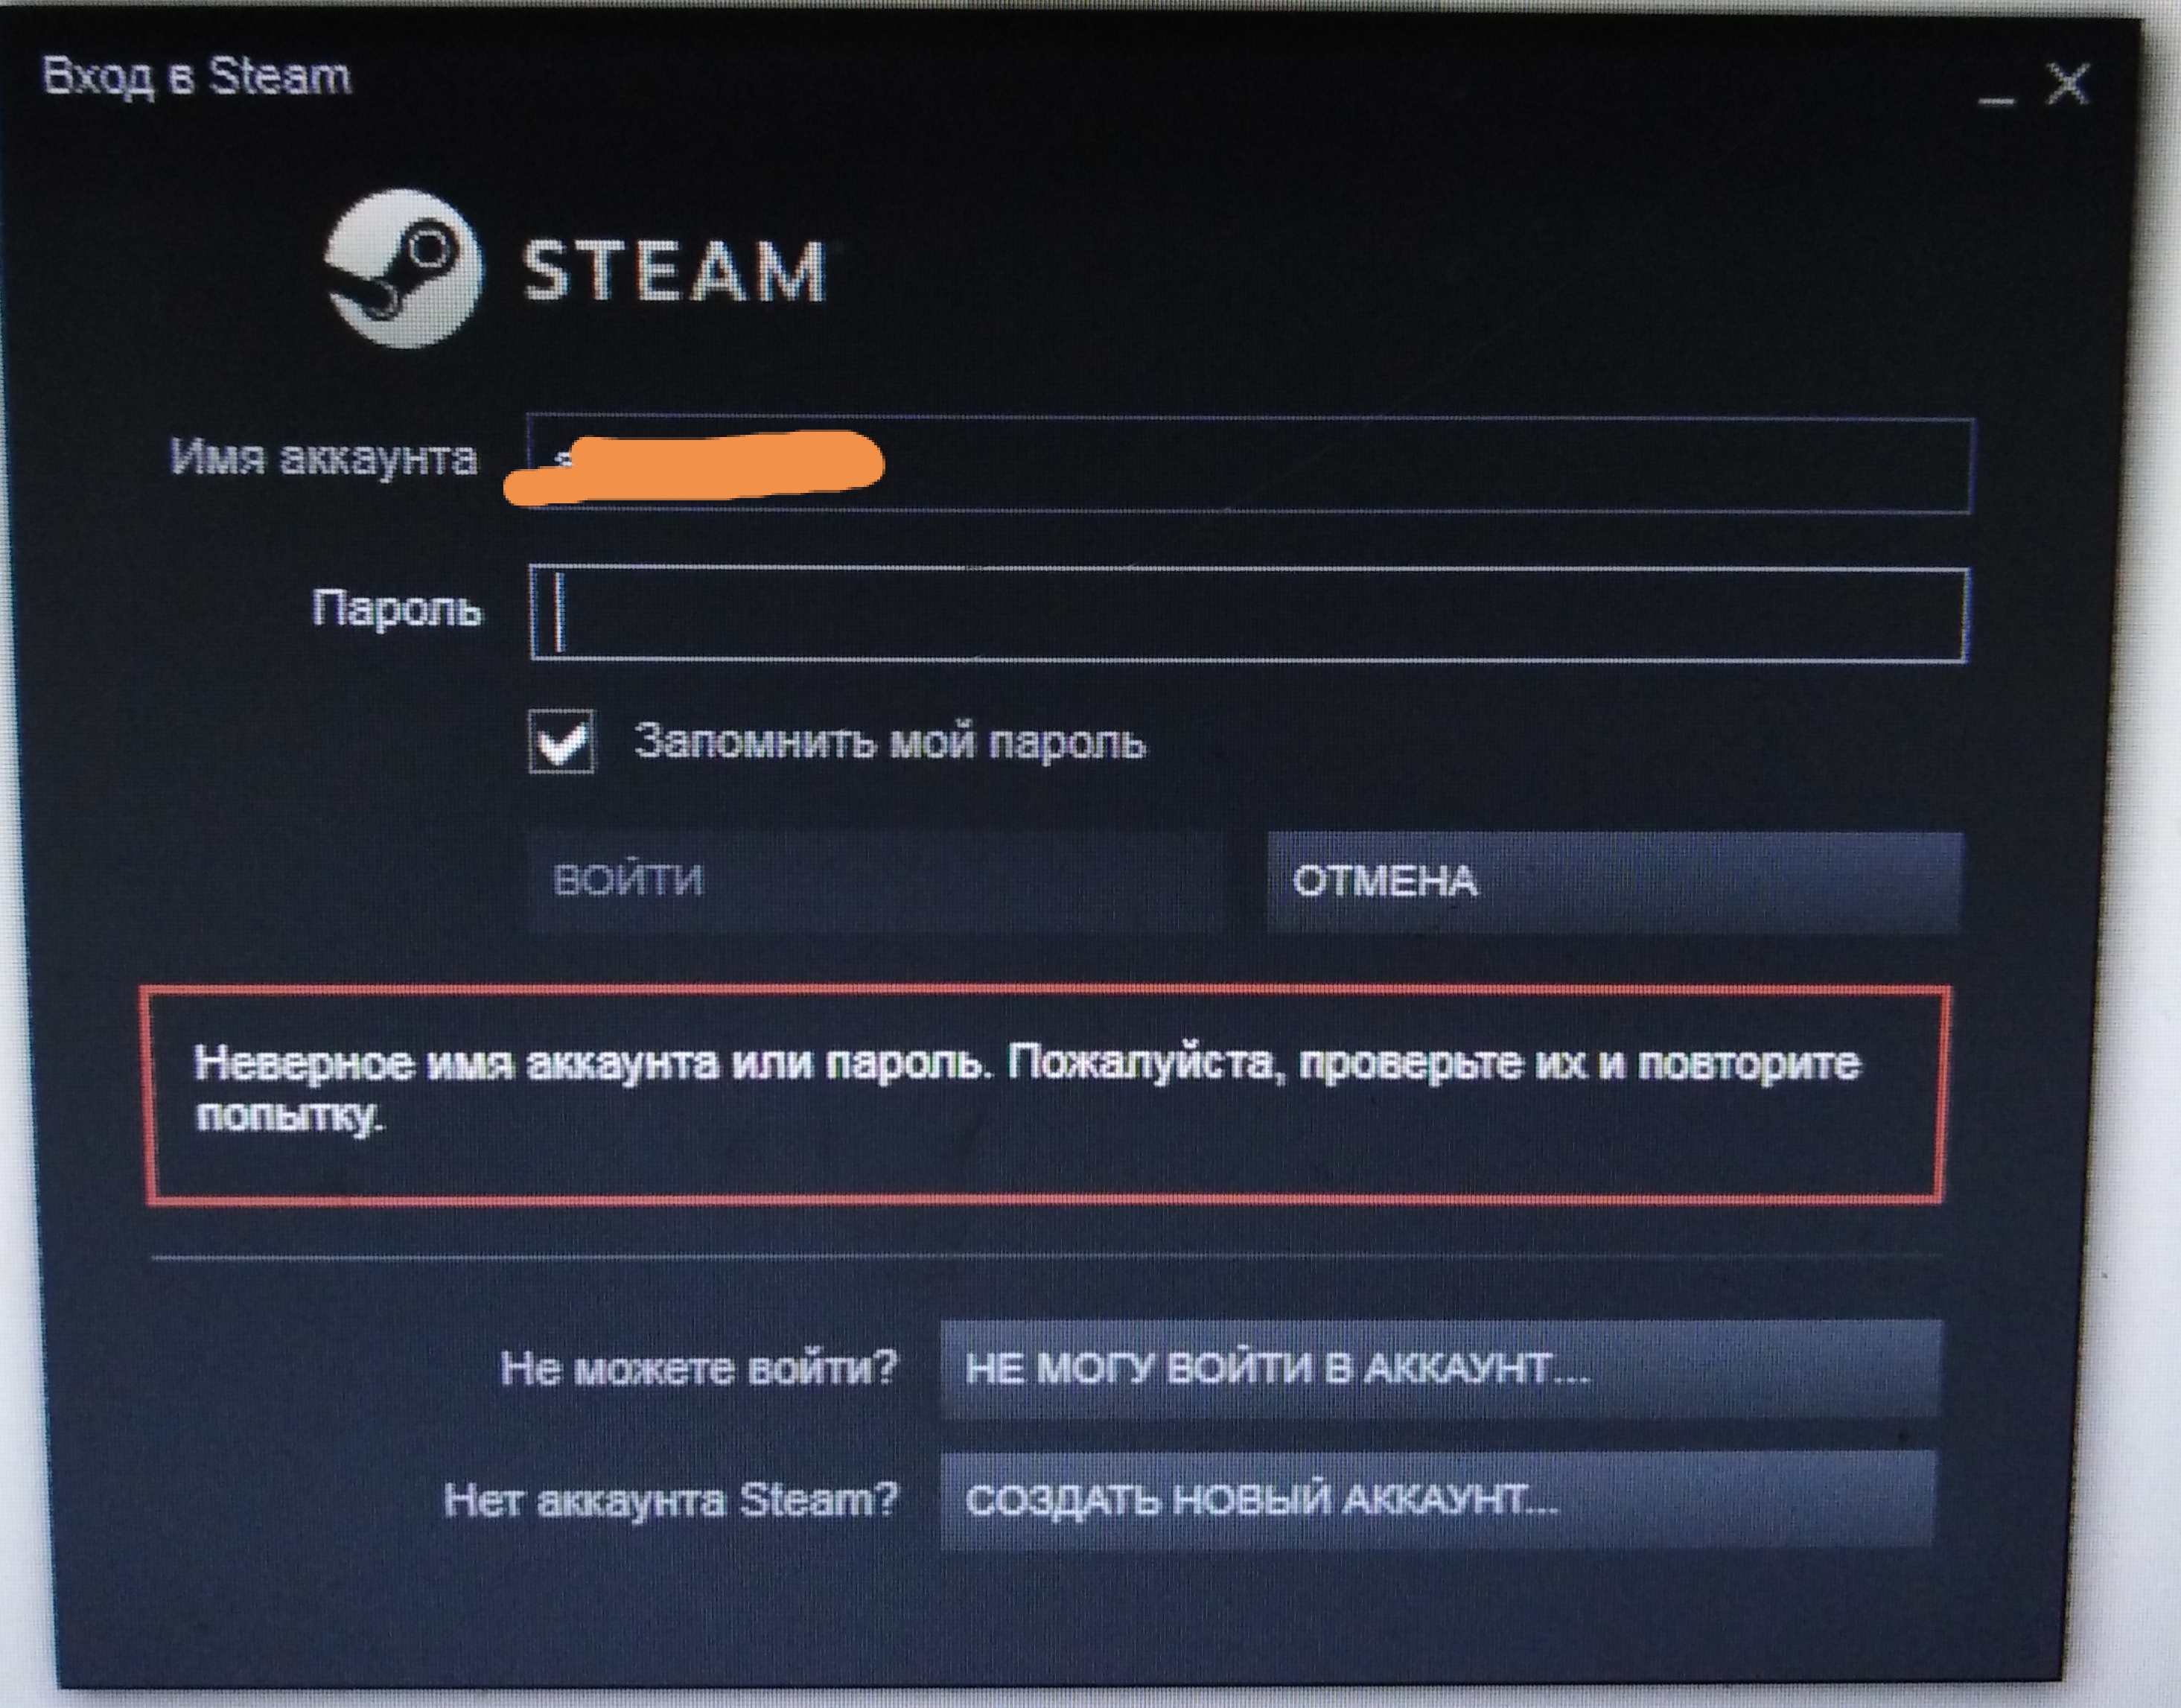 Https unpacking password ru. Steam логин и пароль. Пароли для стим. Пароль в стиме. Пароли для стим аккаунта.